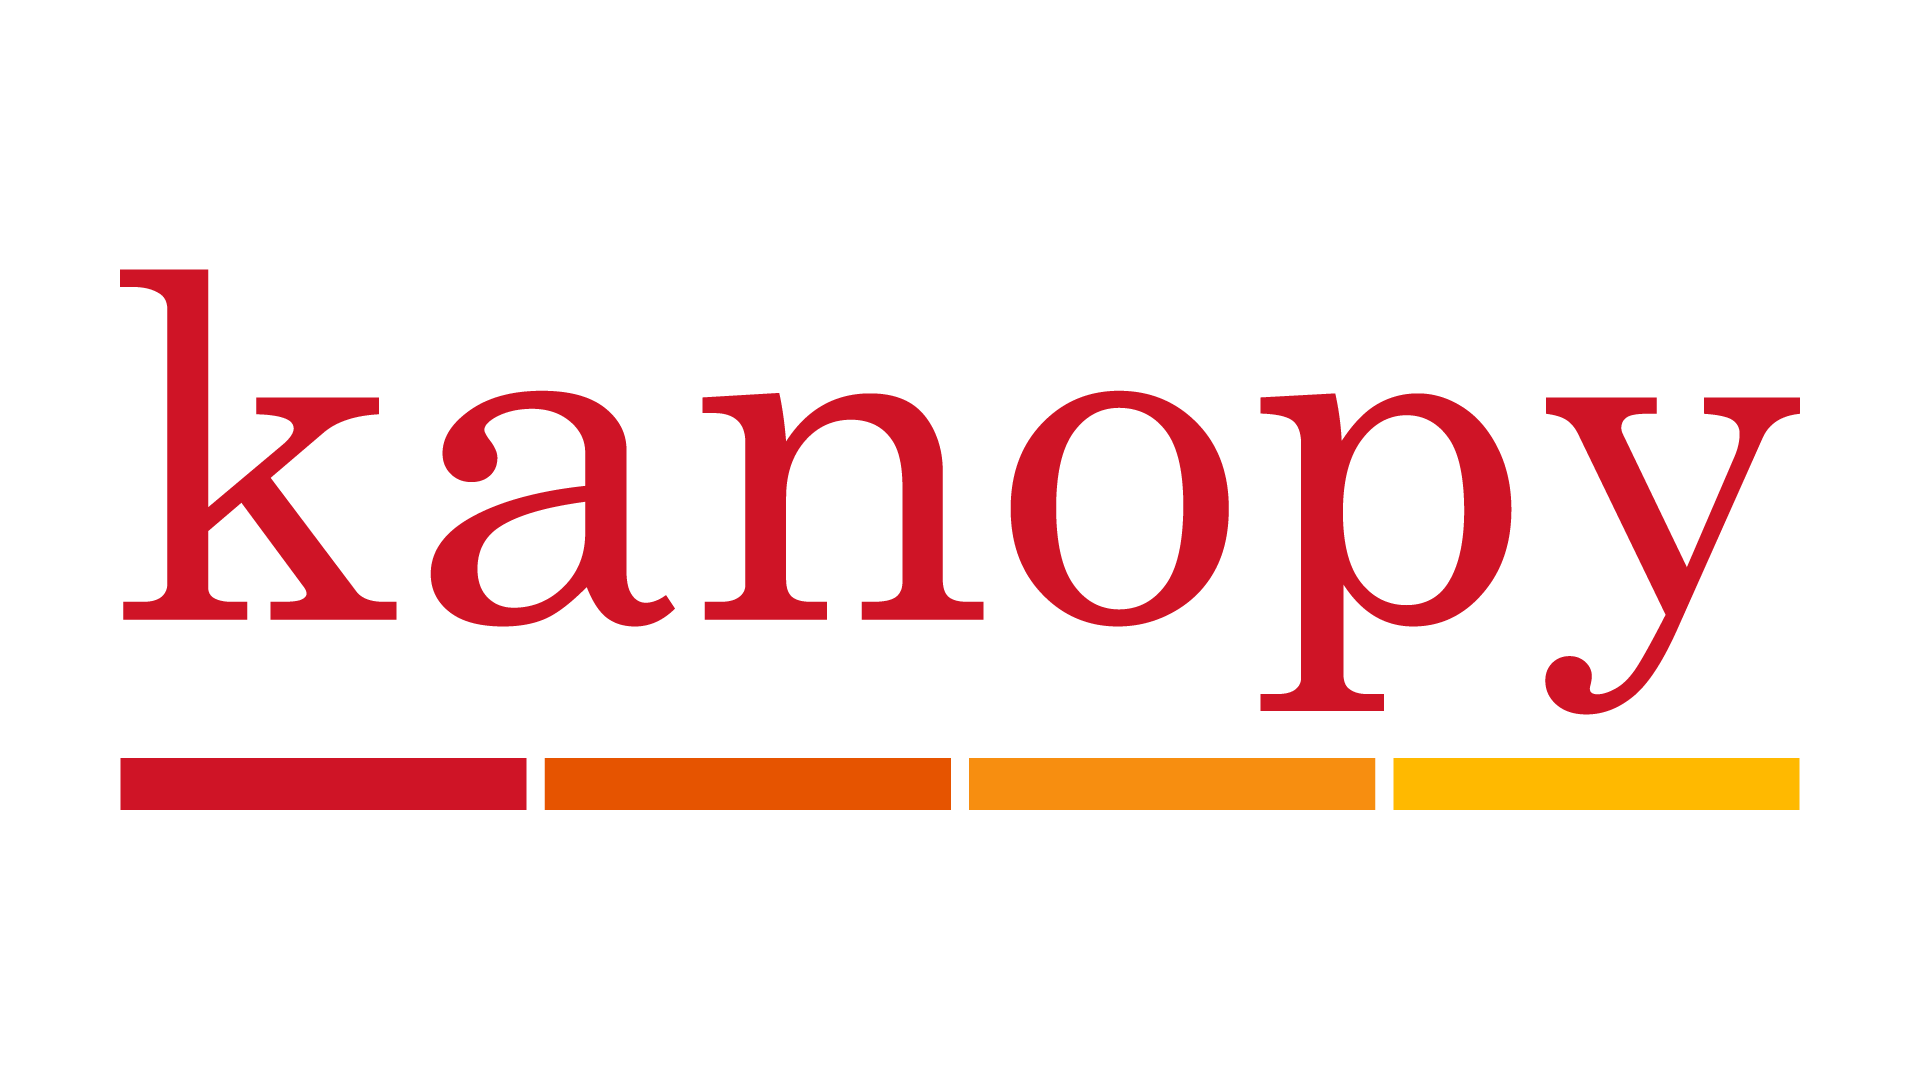 kanopy-logo.png